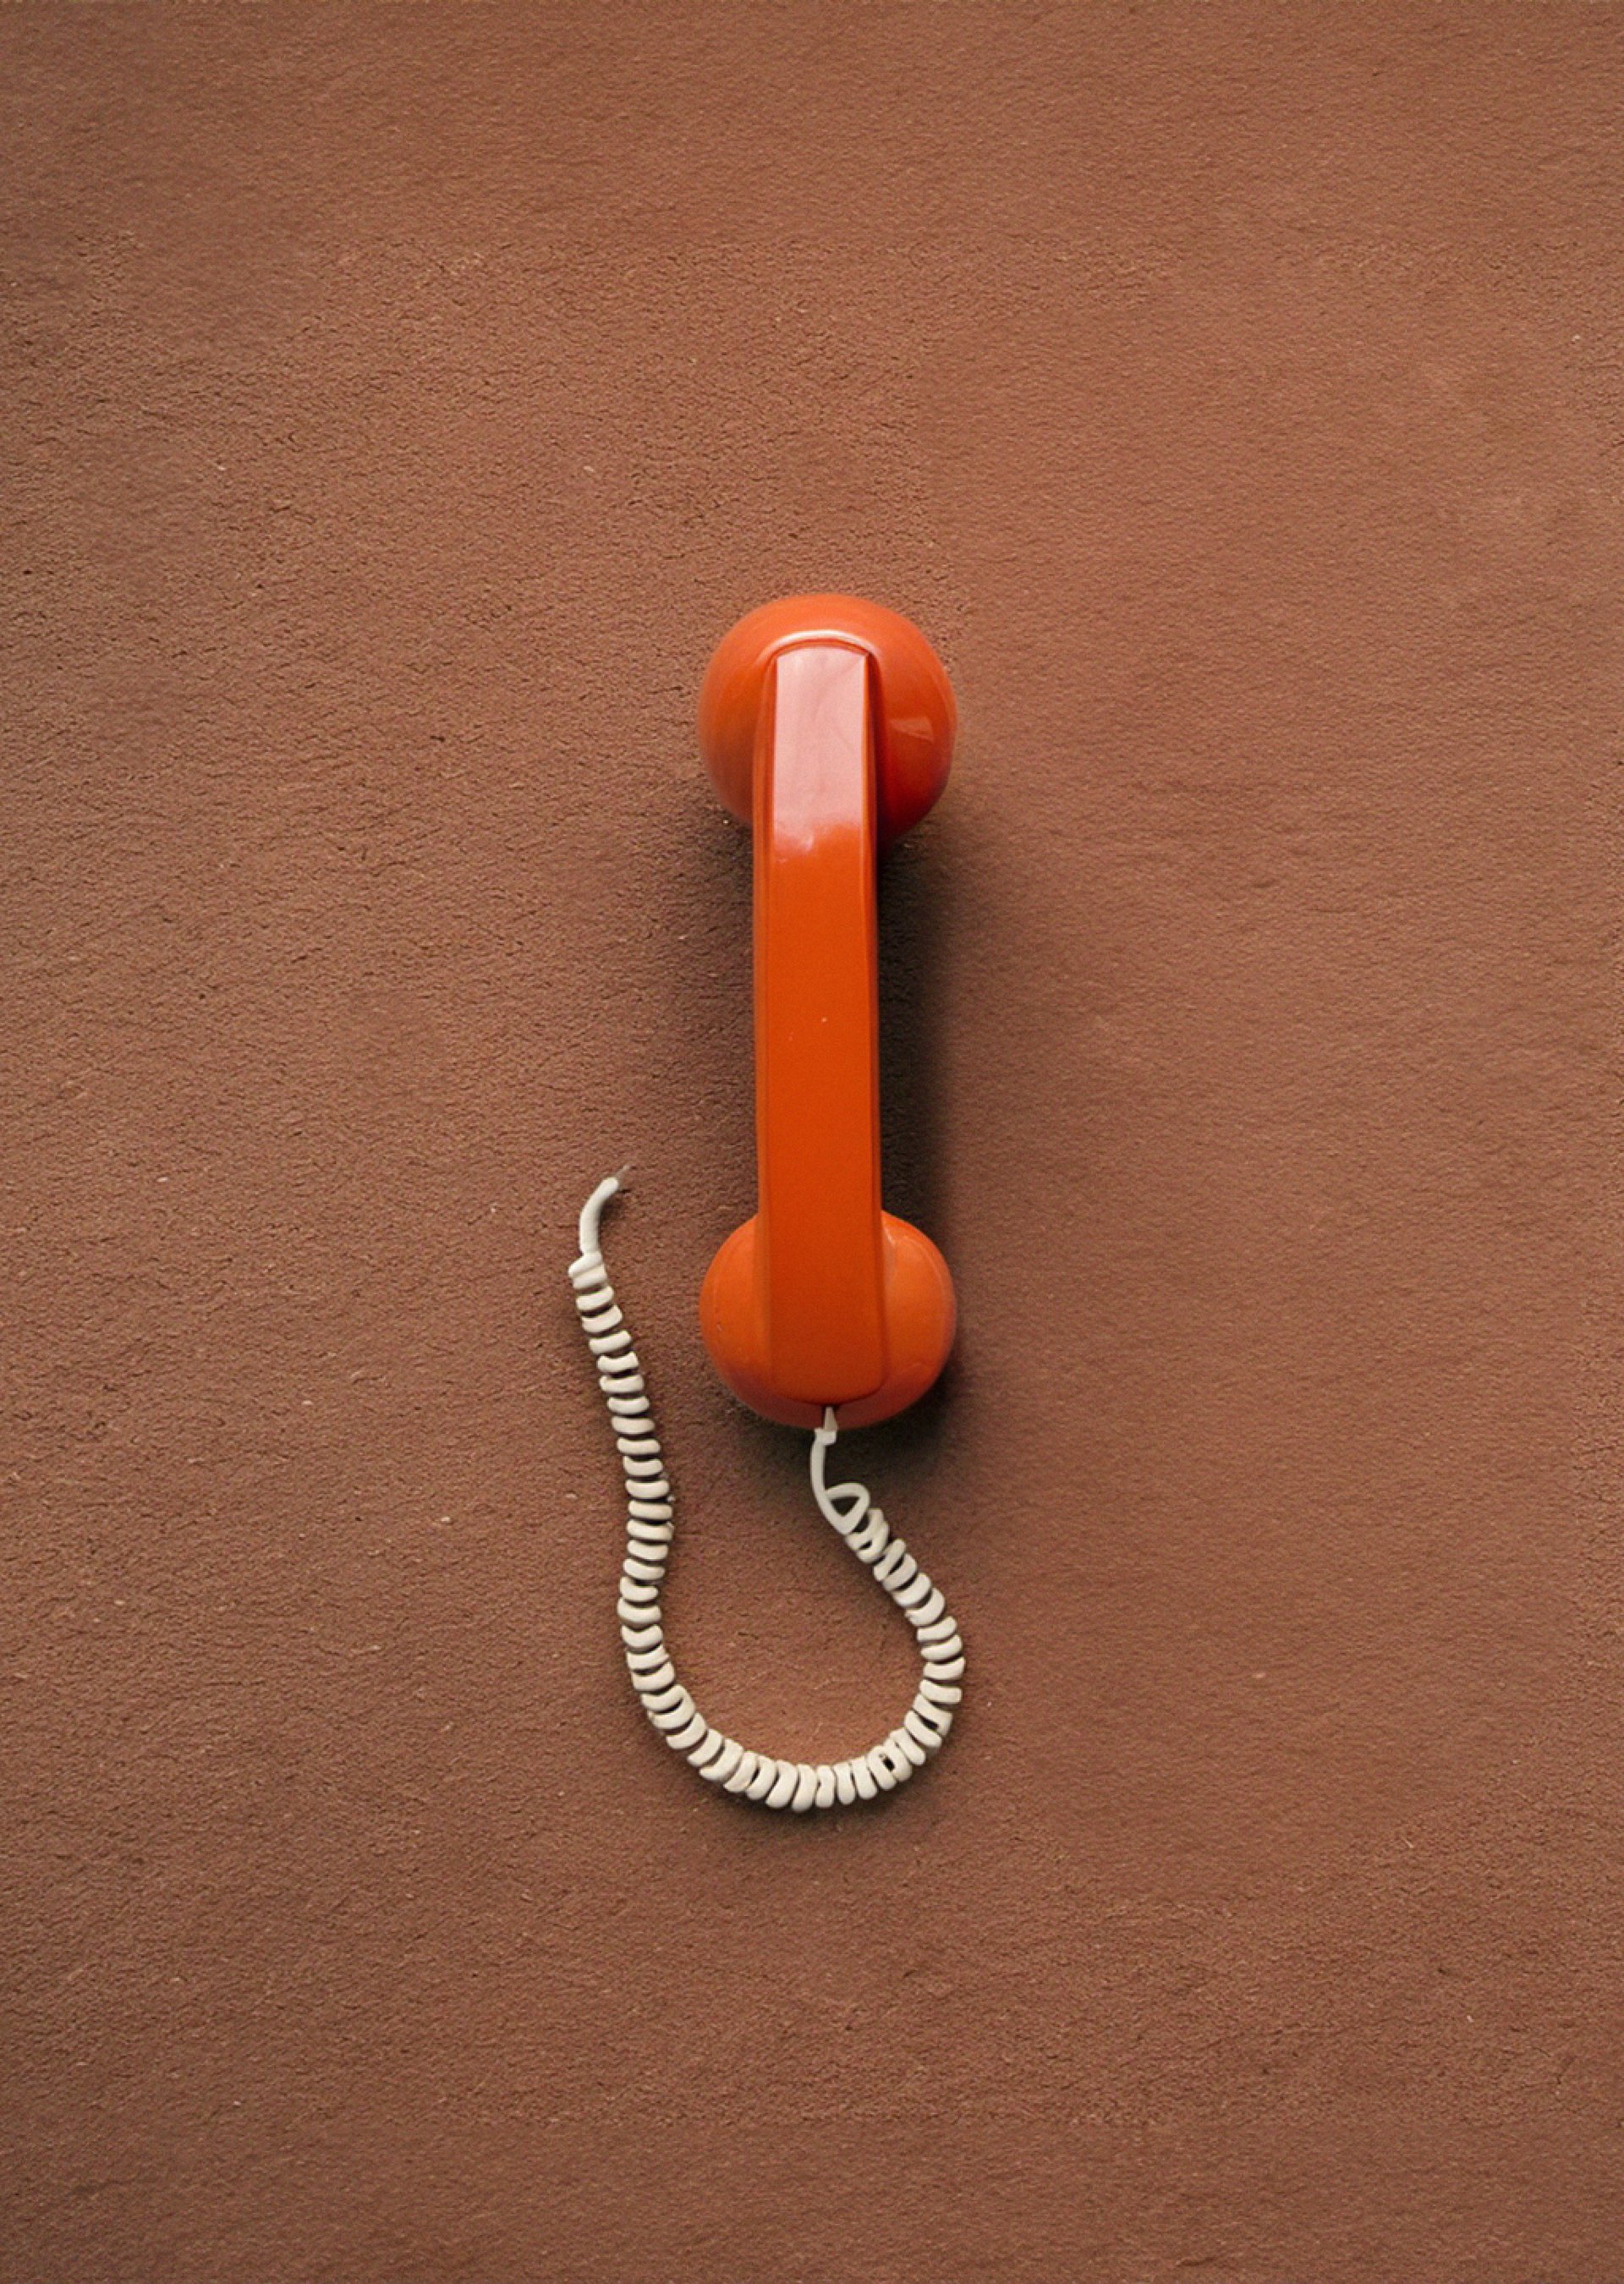 orange retro telephone